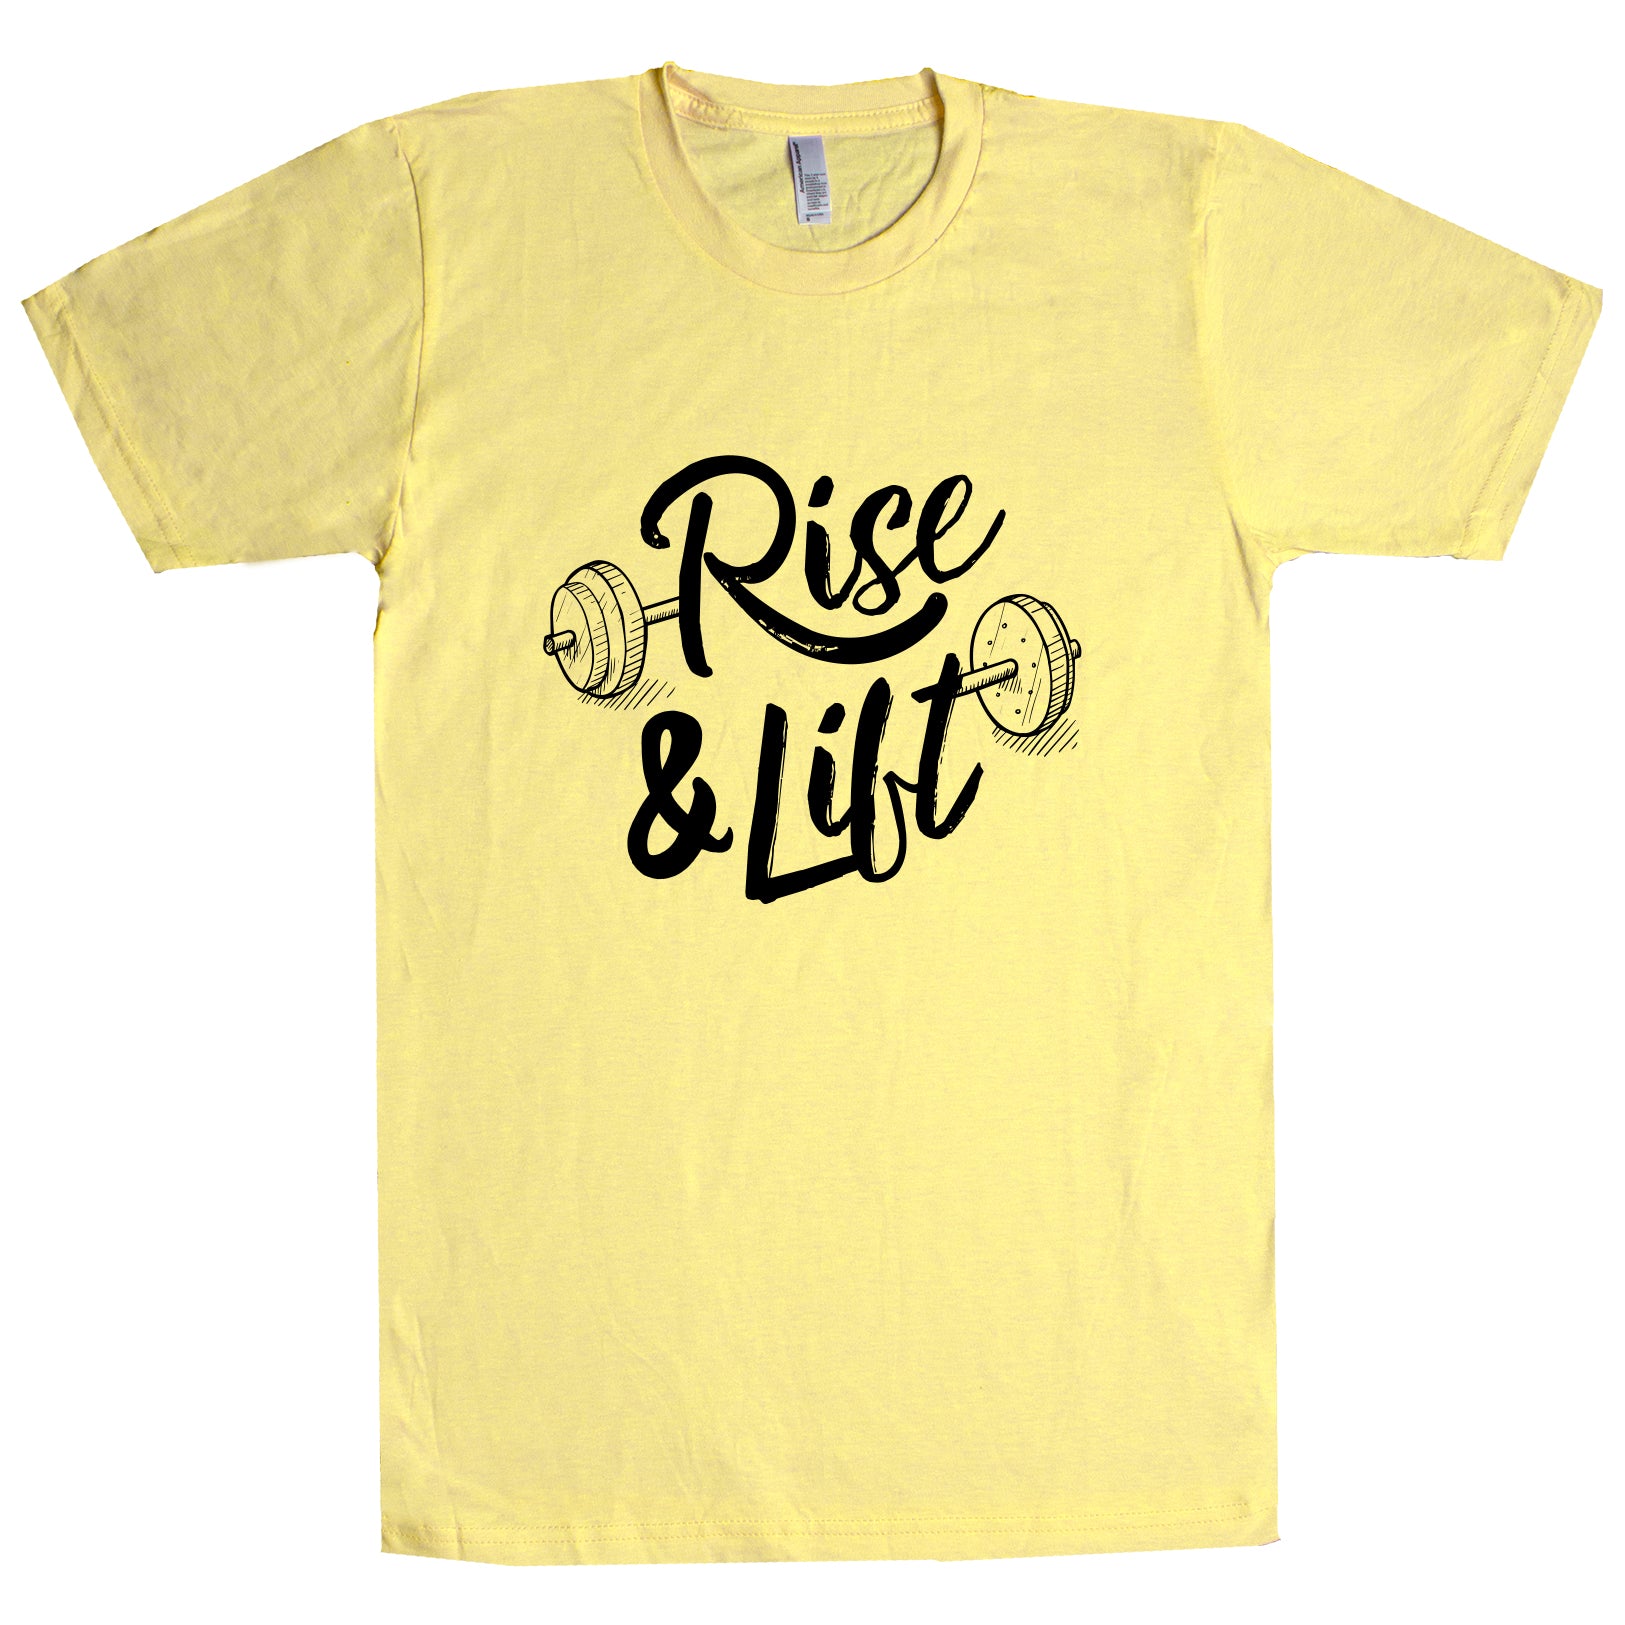 Rise and Lift Unisex T Shirt